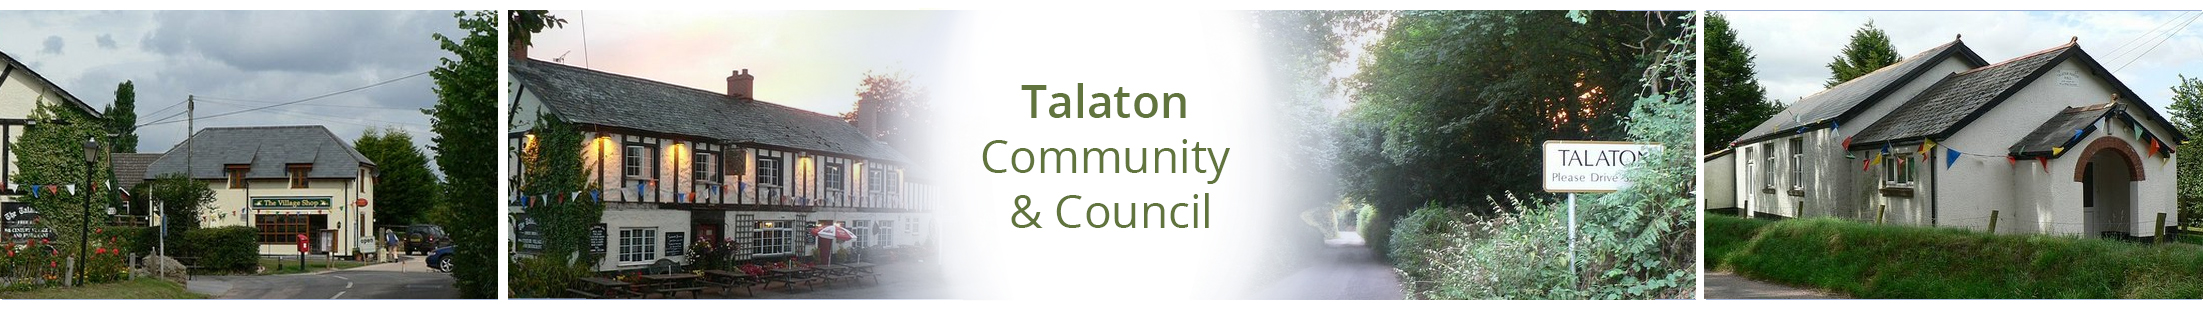 Header Image for Talaton Parish Council